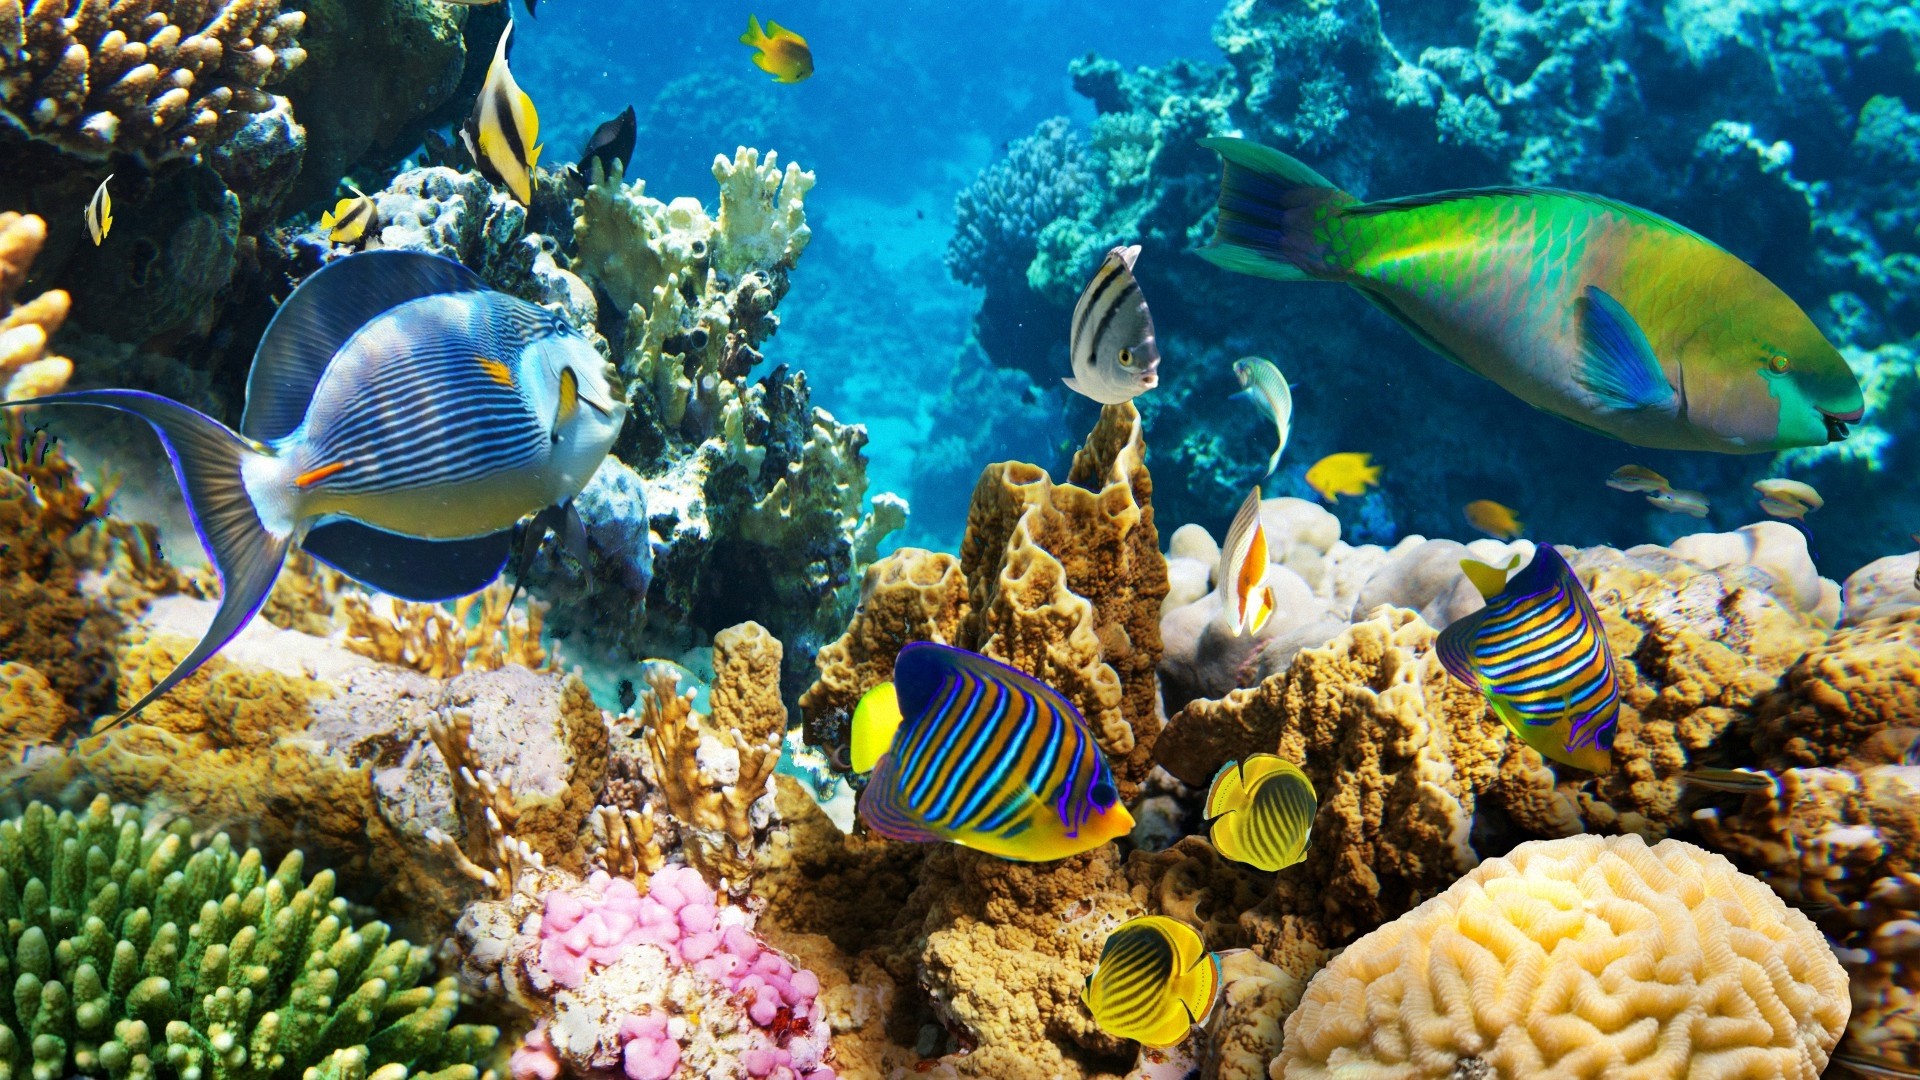 Coral Reef Wallpaper image hd